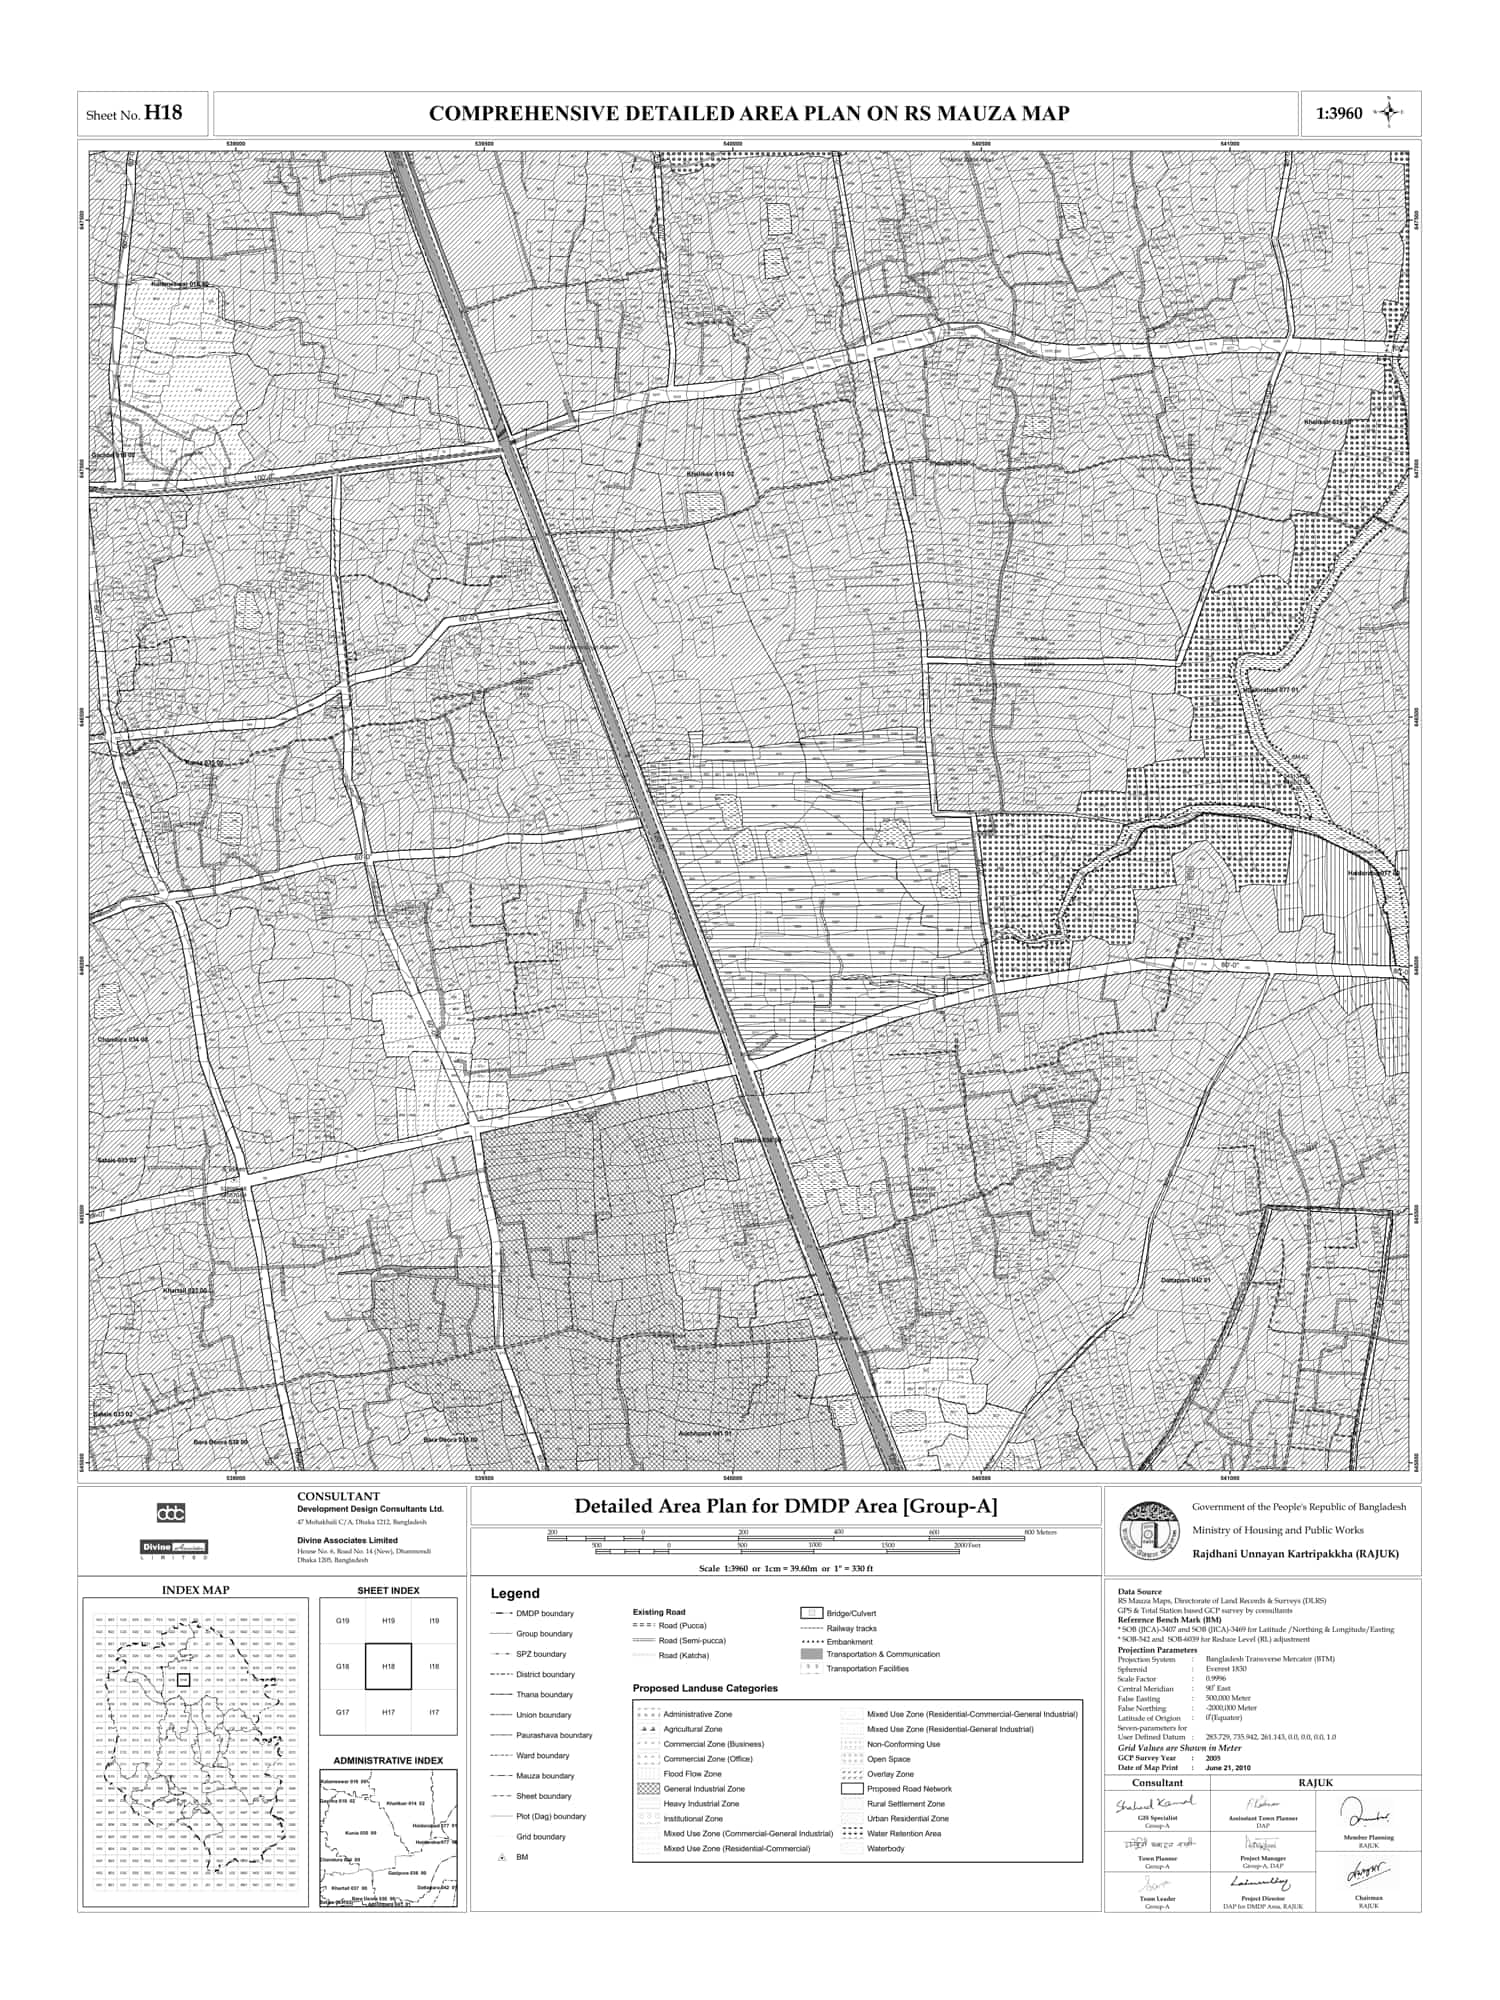 Detailed Area Planning DAP map of Dhaka city